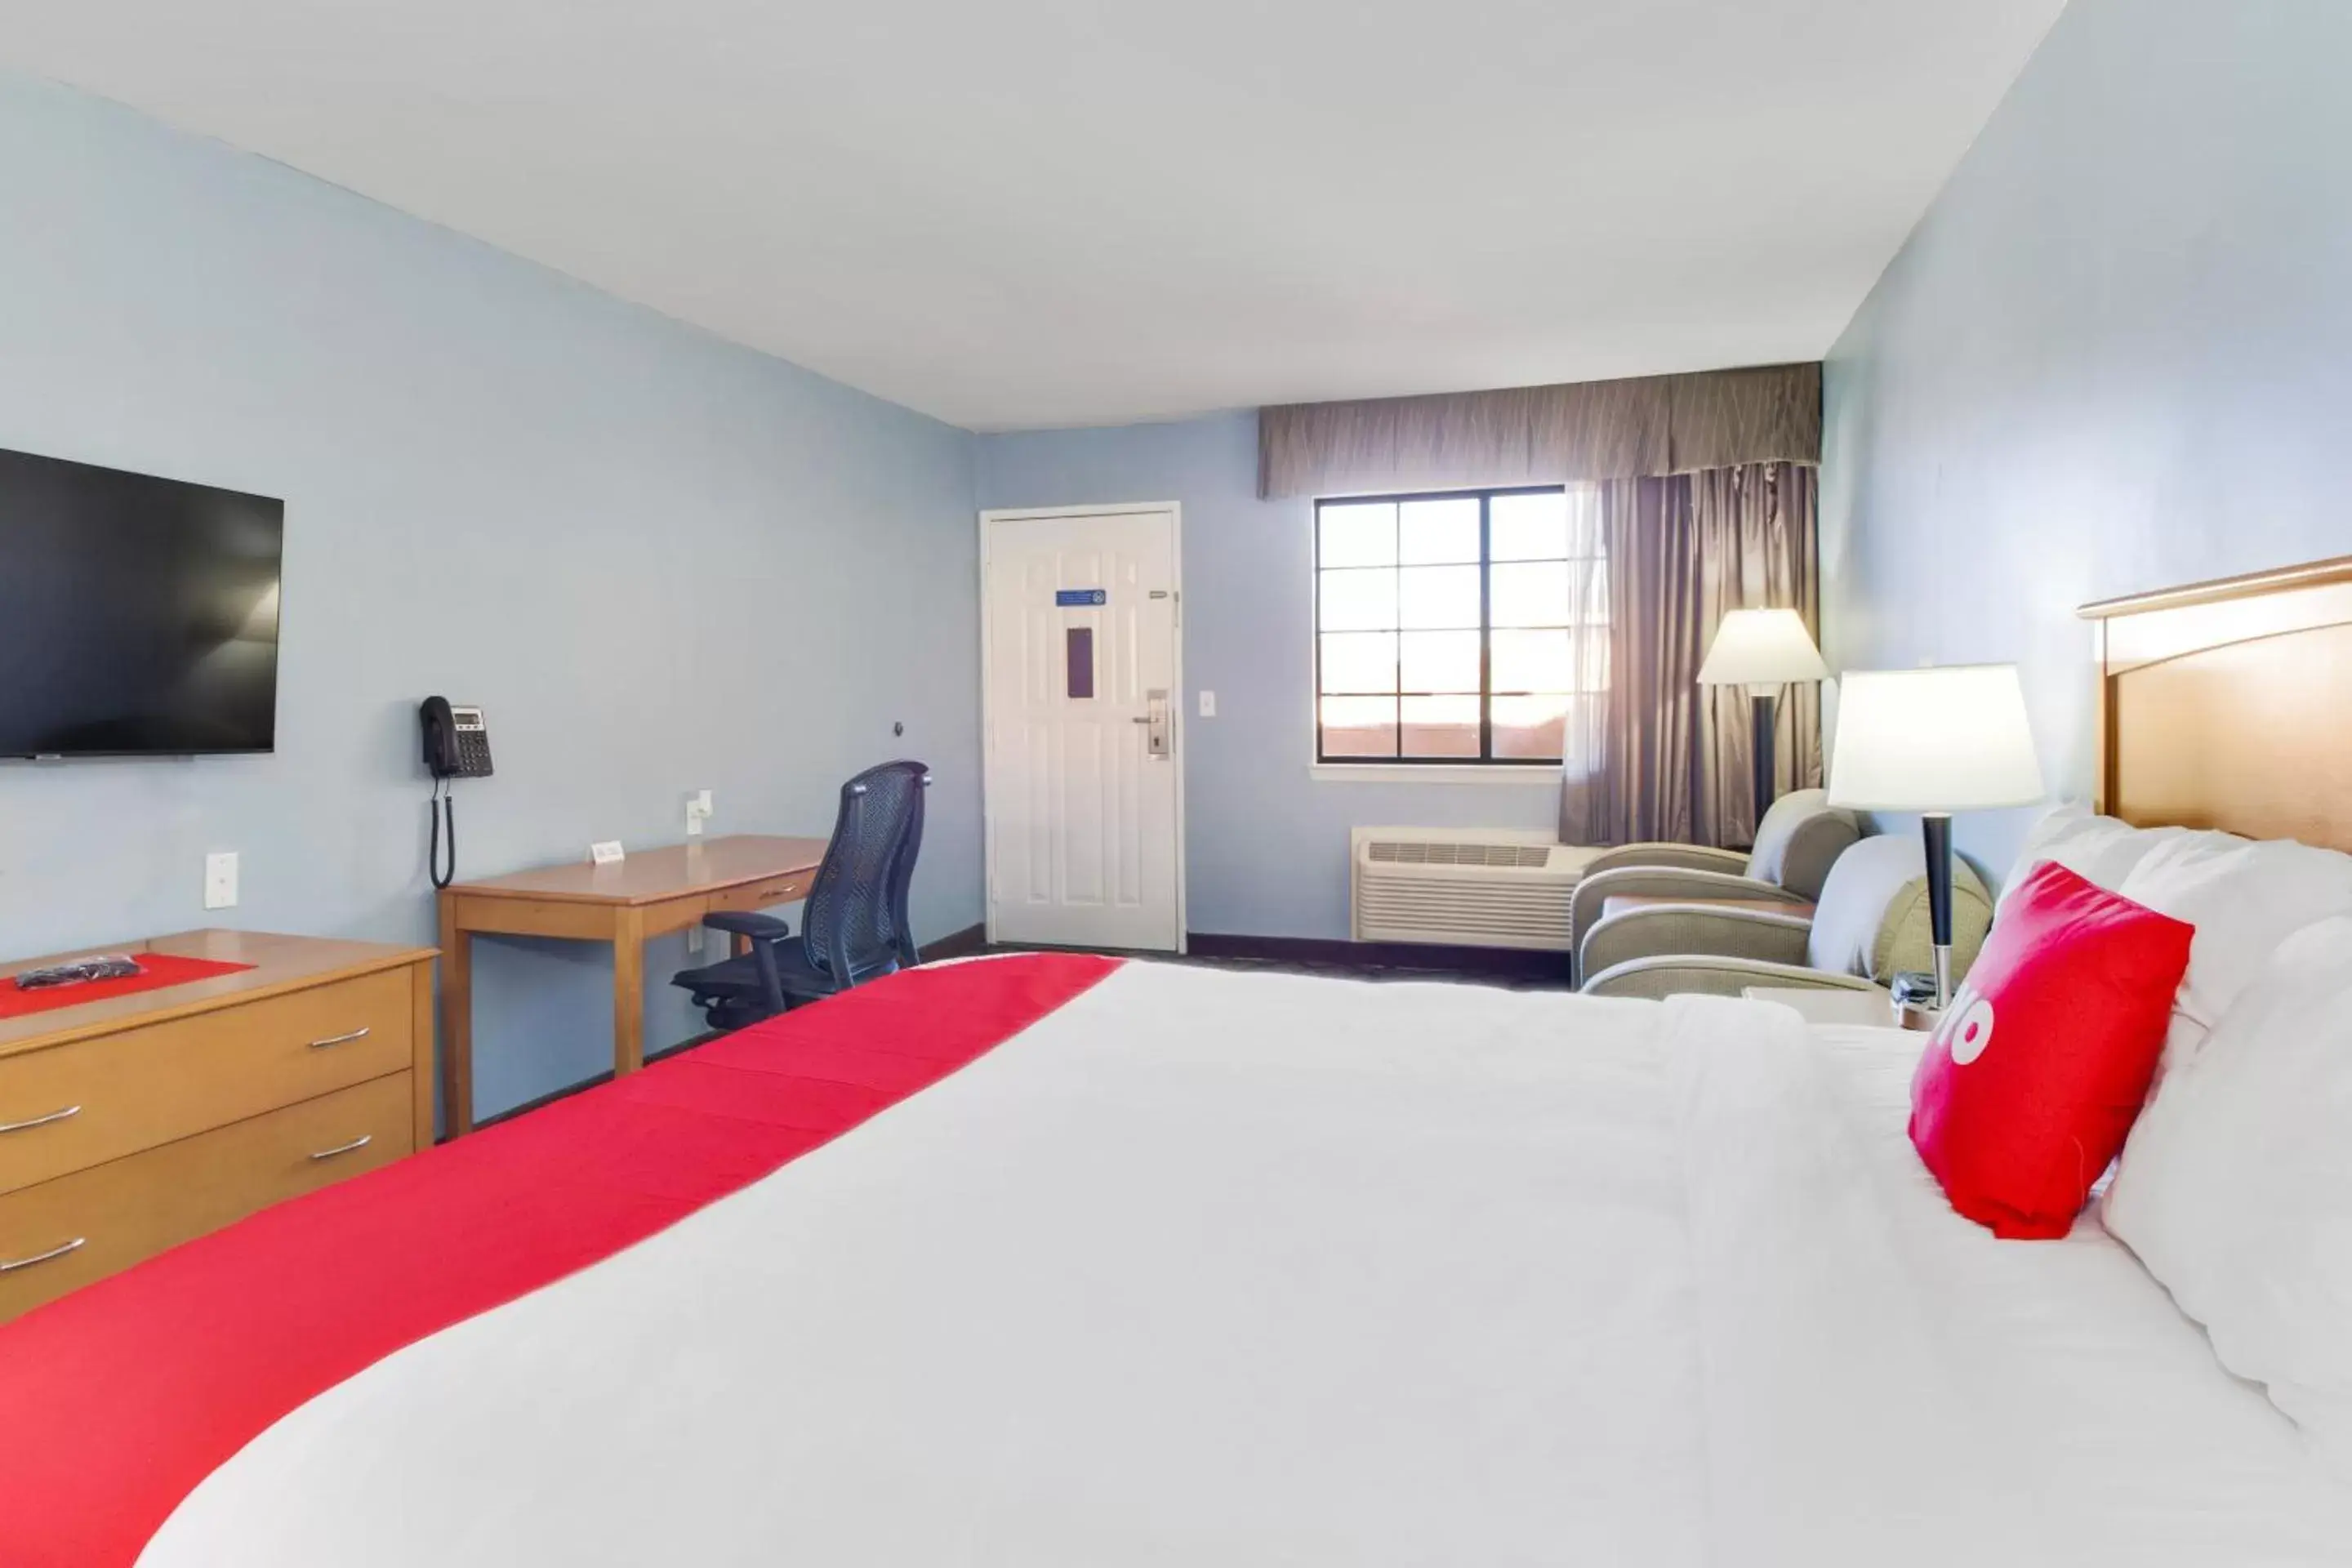 Bedroom in OYO Hotel Ingleside TX